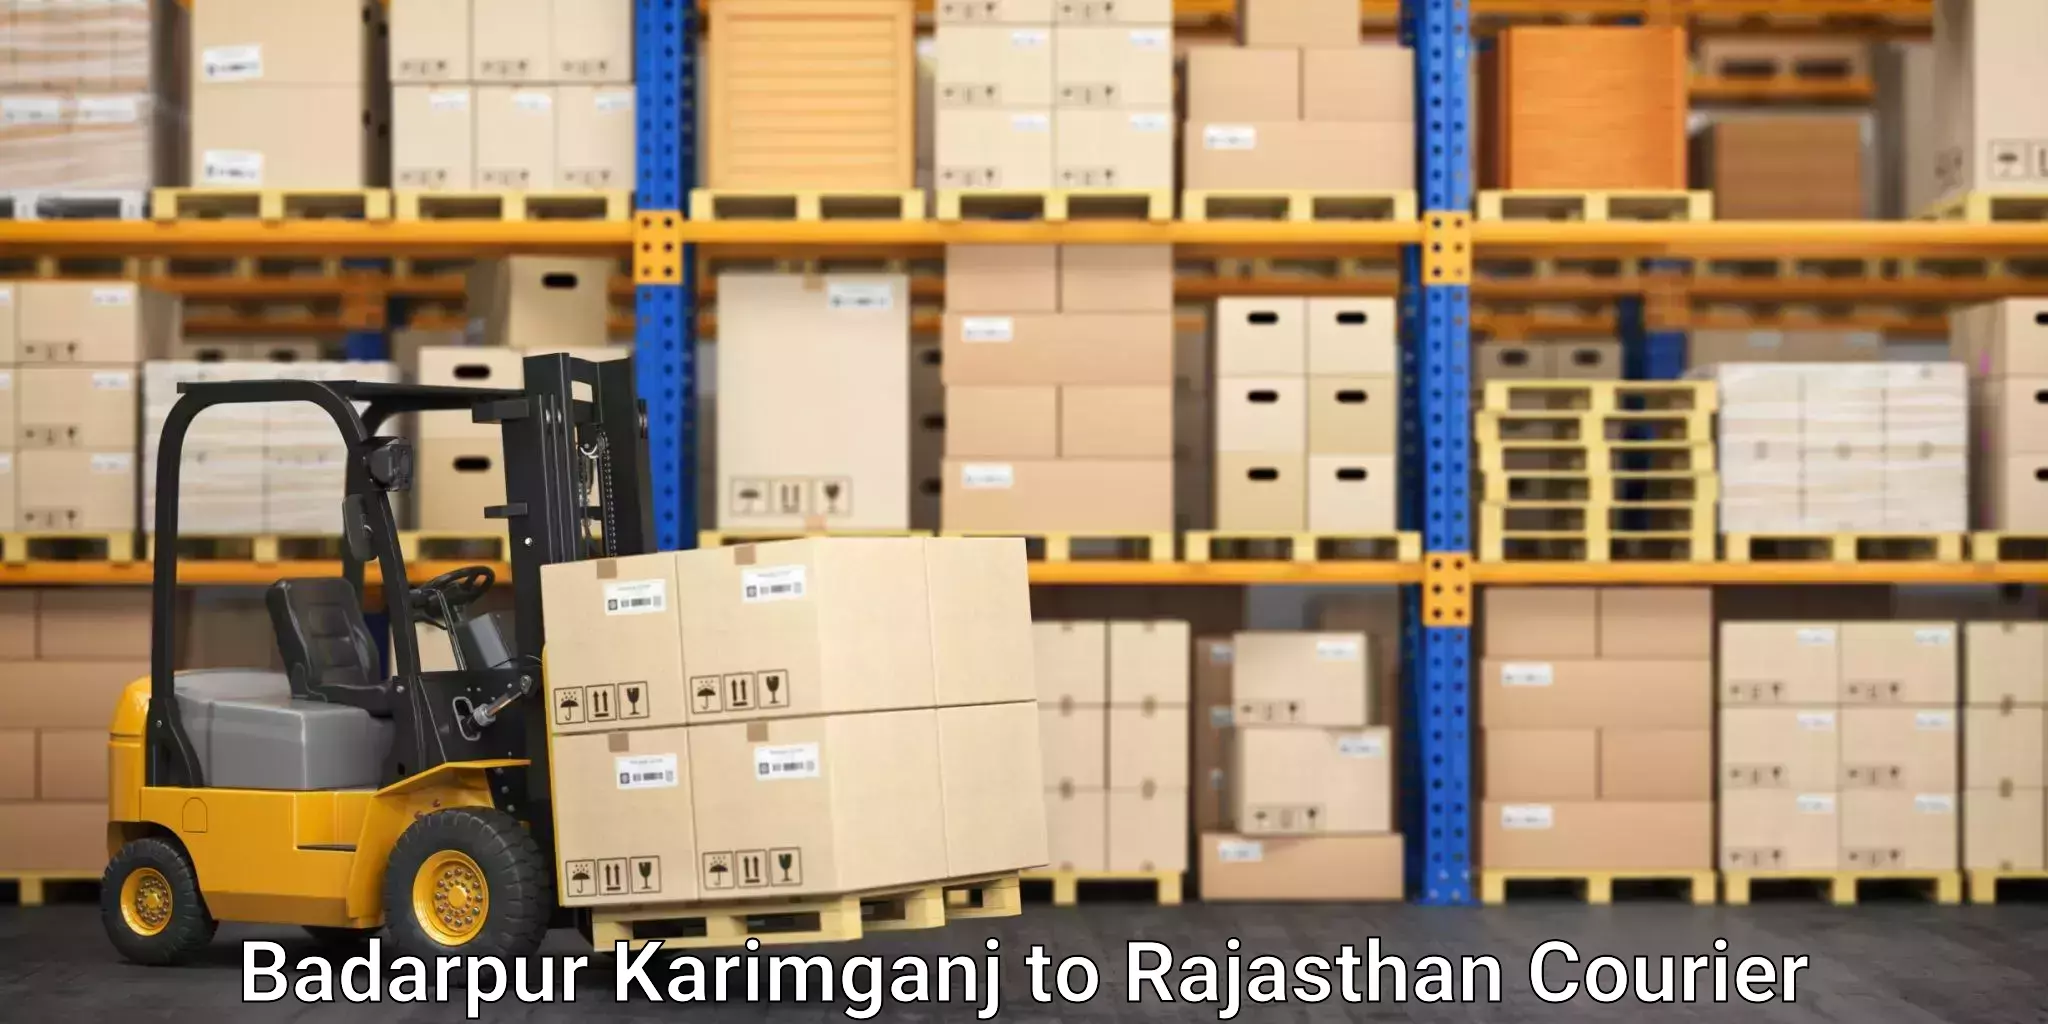 Global shipping networks Badarpur Karimganj to Deoli